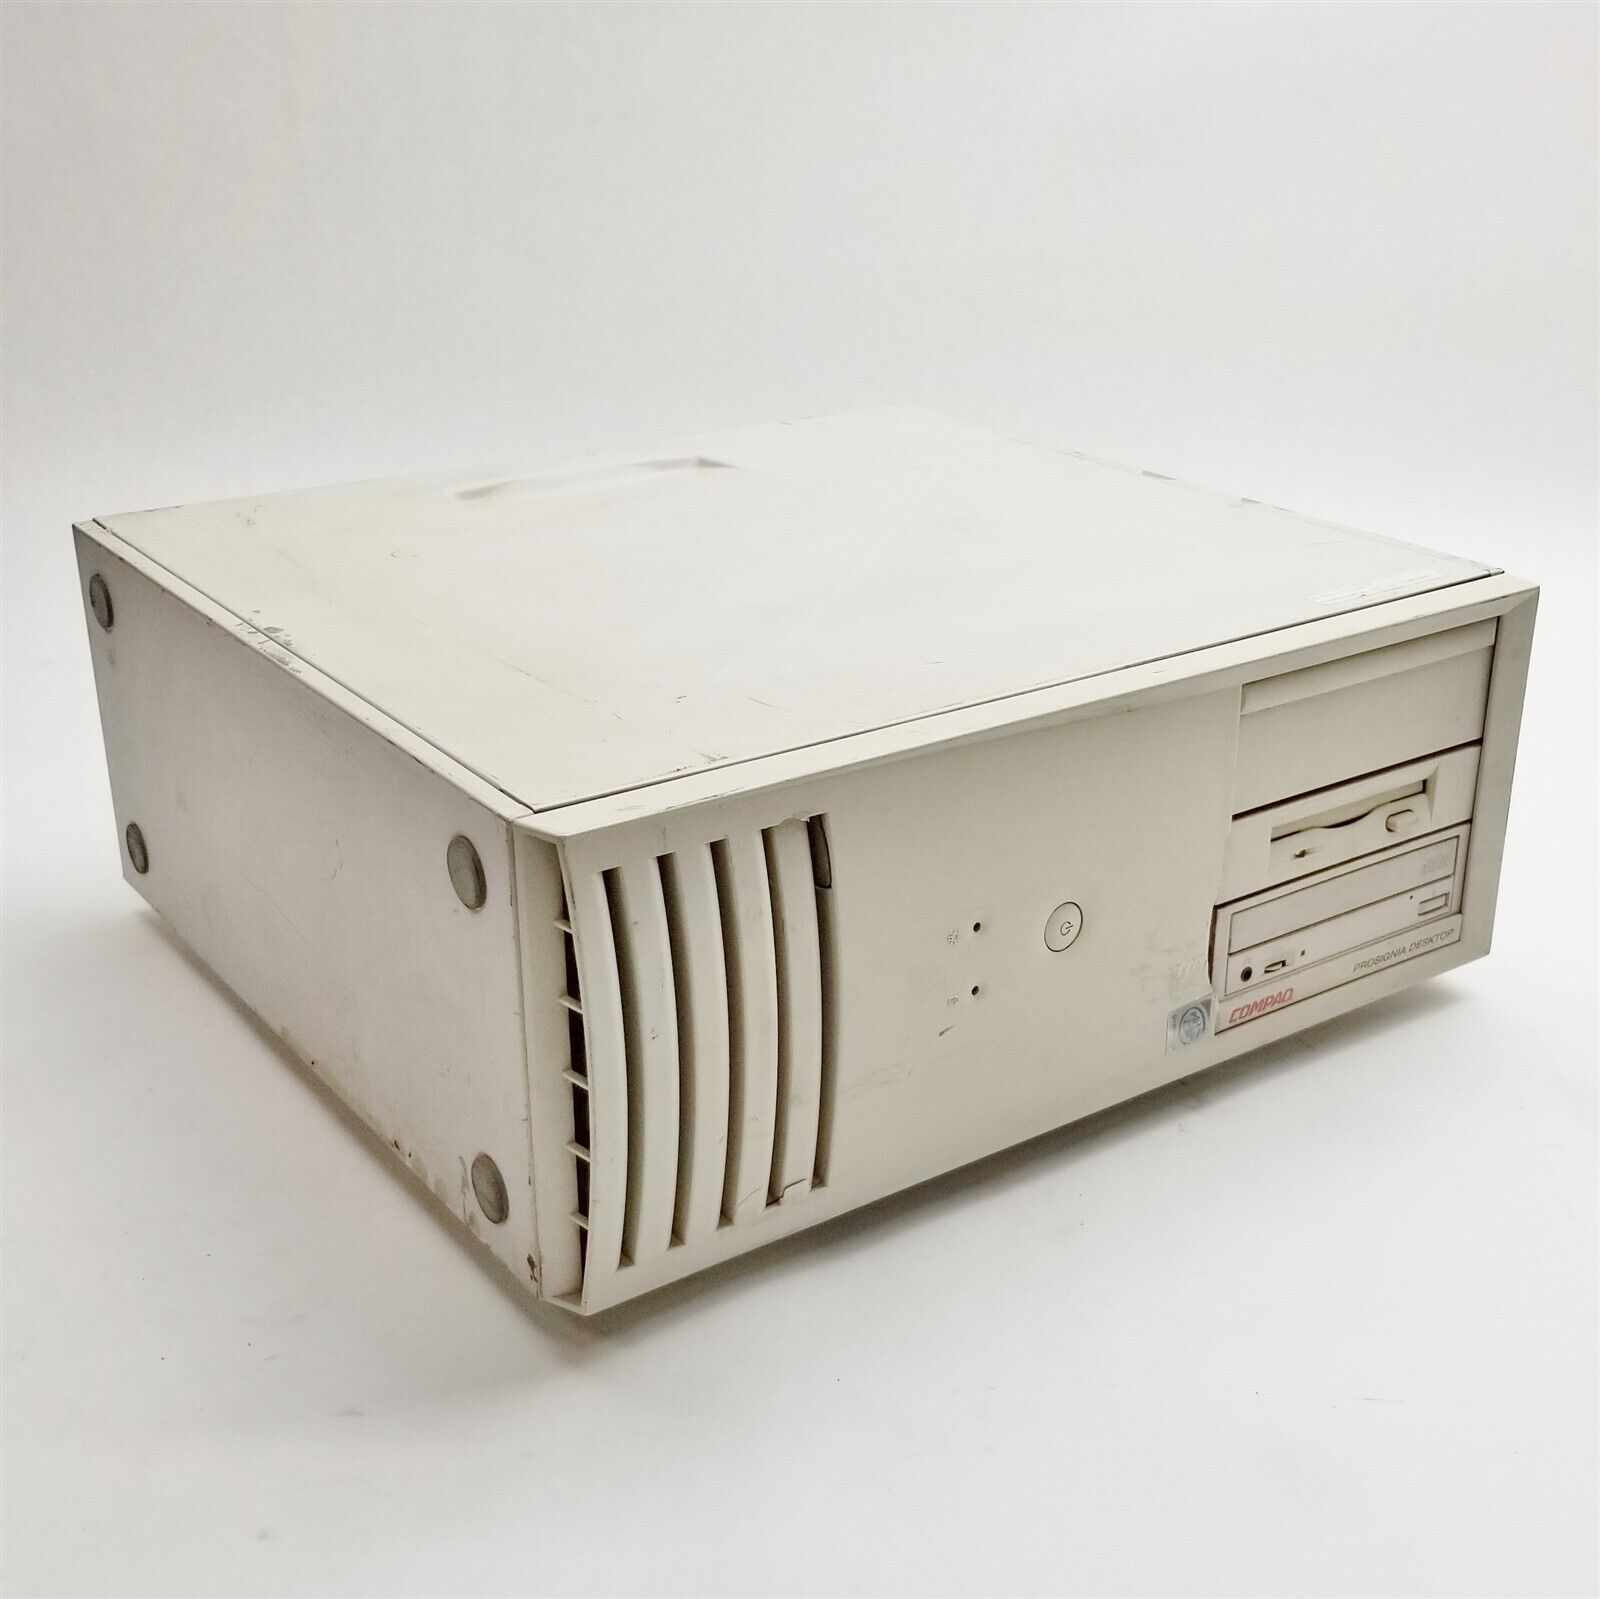 Compaq Prosignia Desktop Pentium II 400MHz 96MB RAM *No HDD* Vintage Computer PC